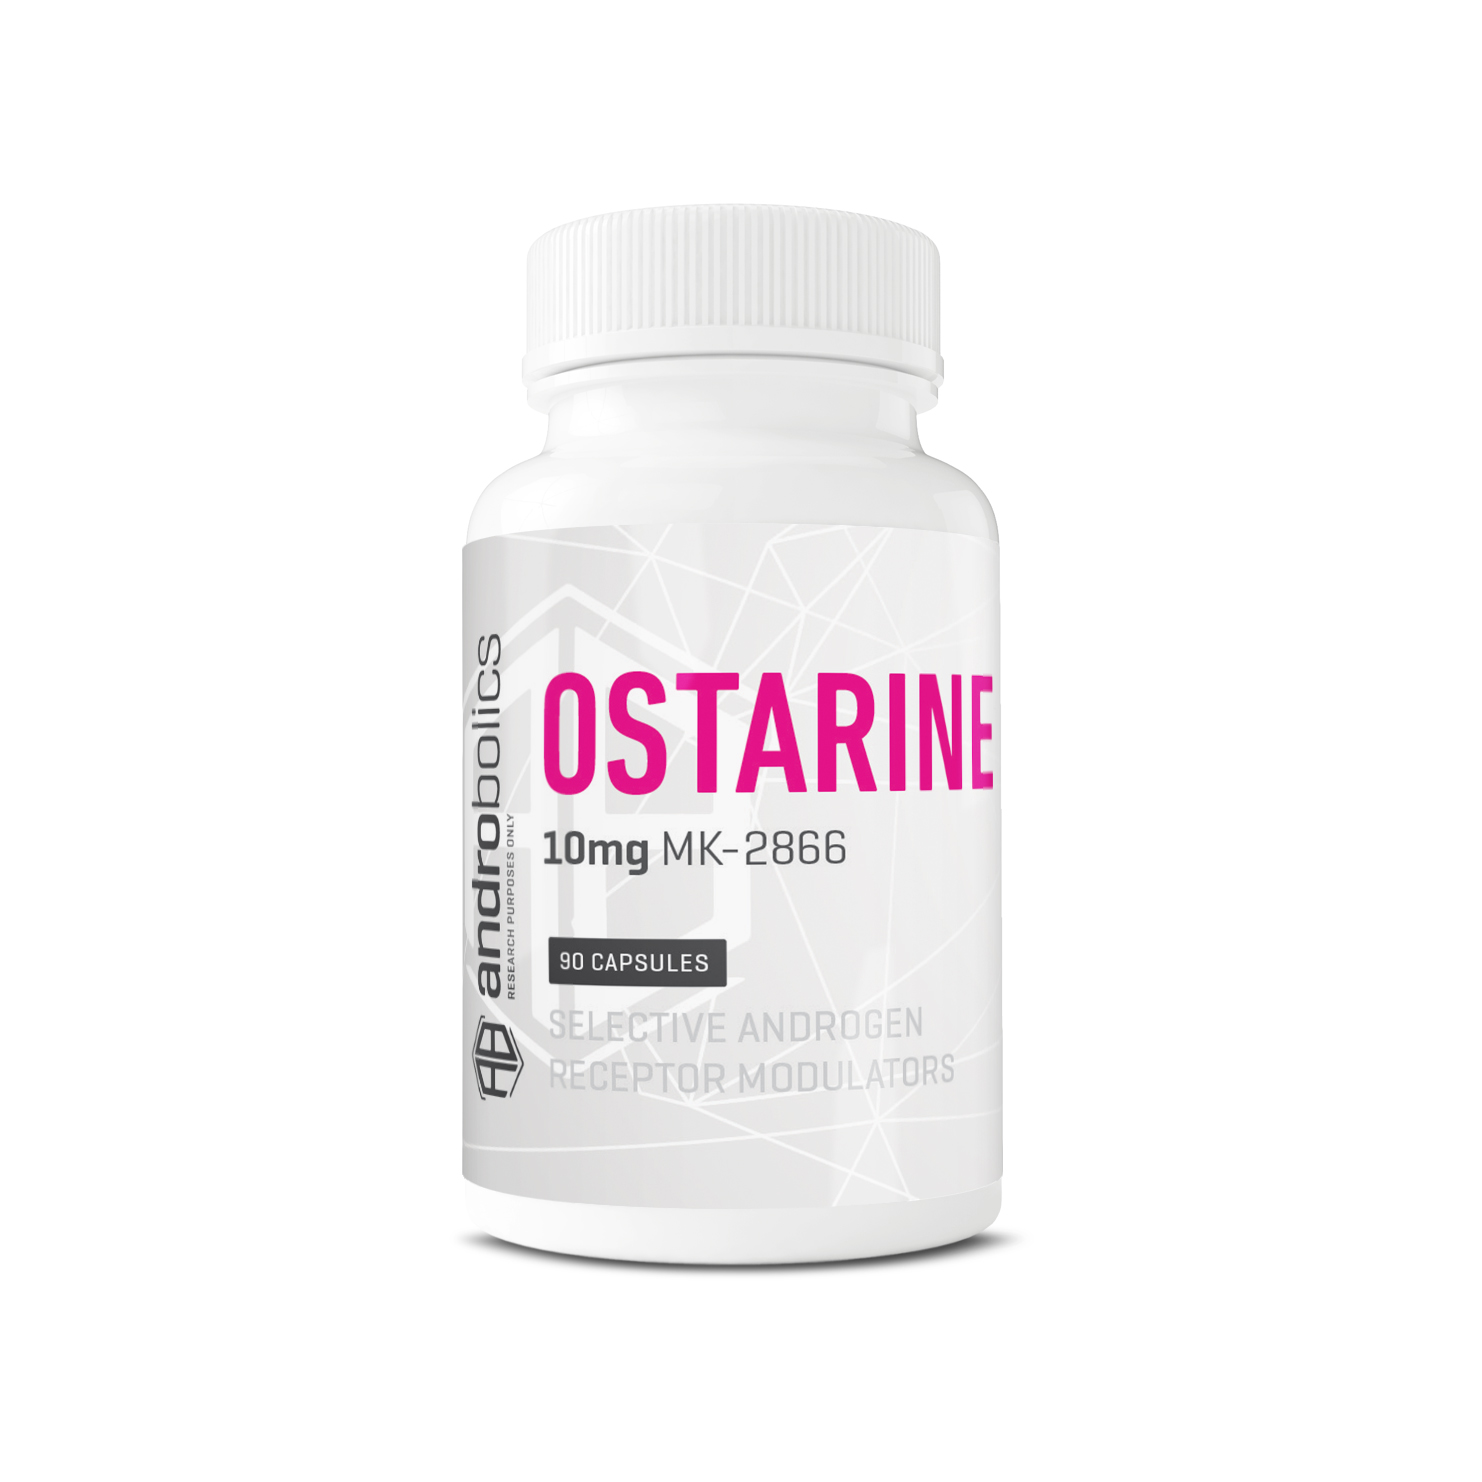 Ostarine Canada - Bottle of Ostarine MK2866 with 90 capsules of 10mg